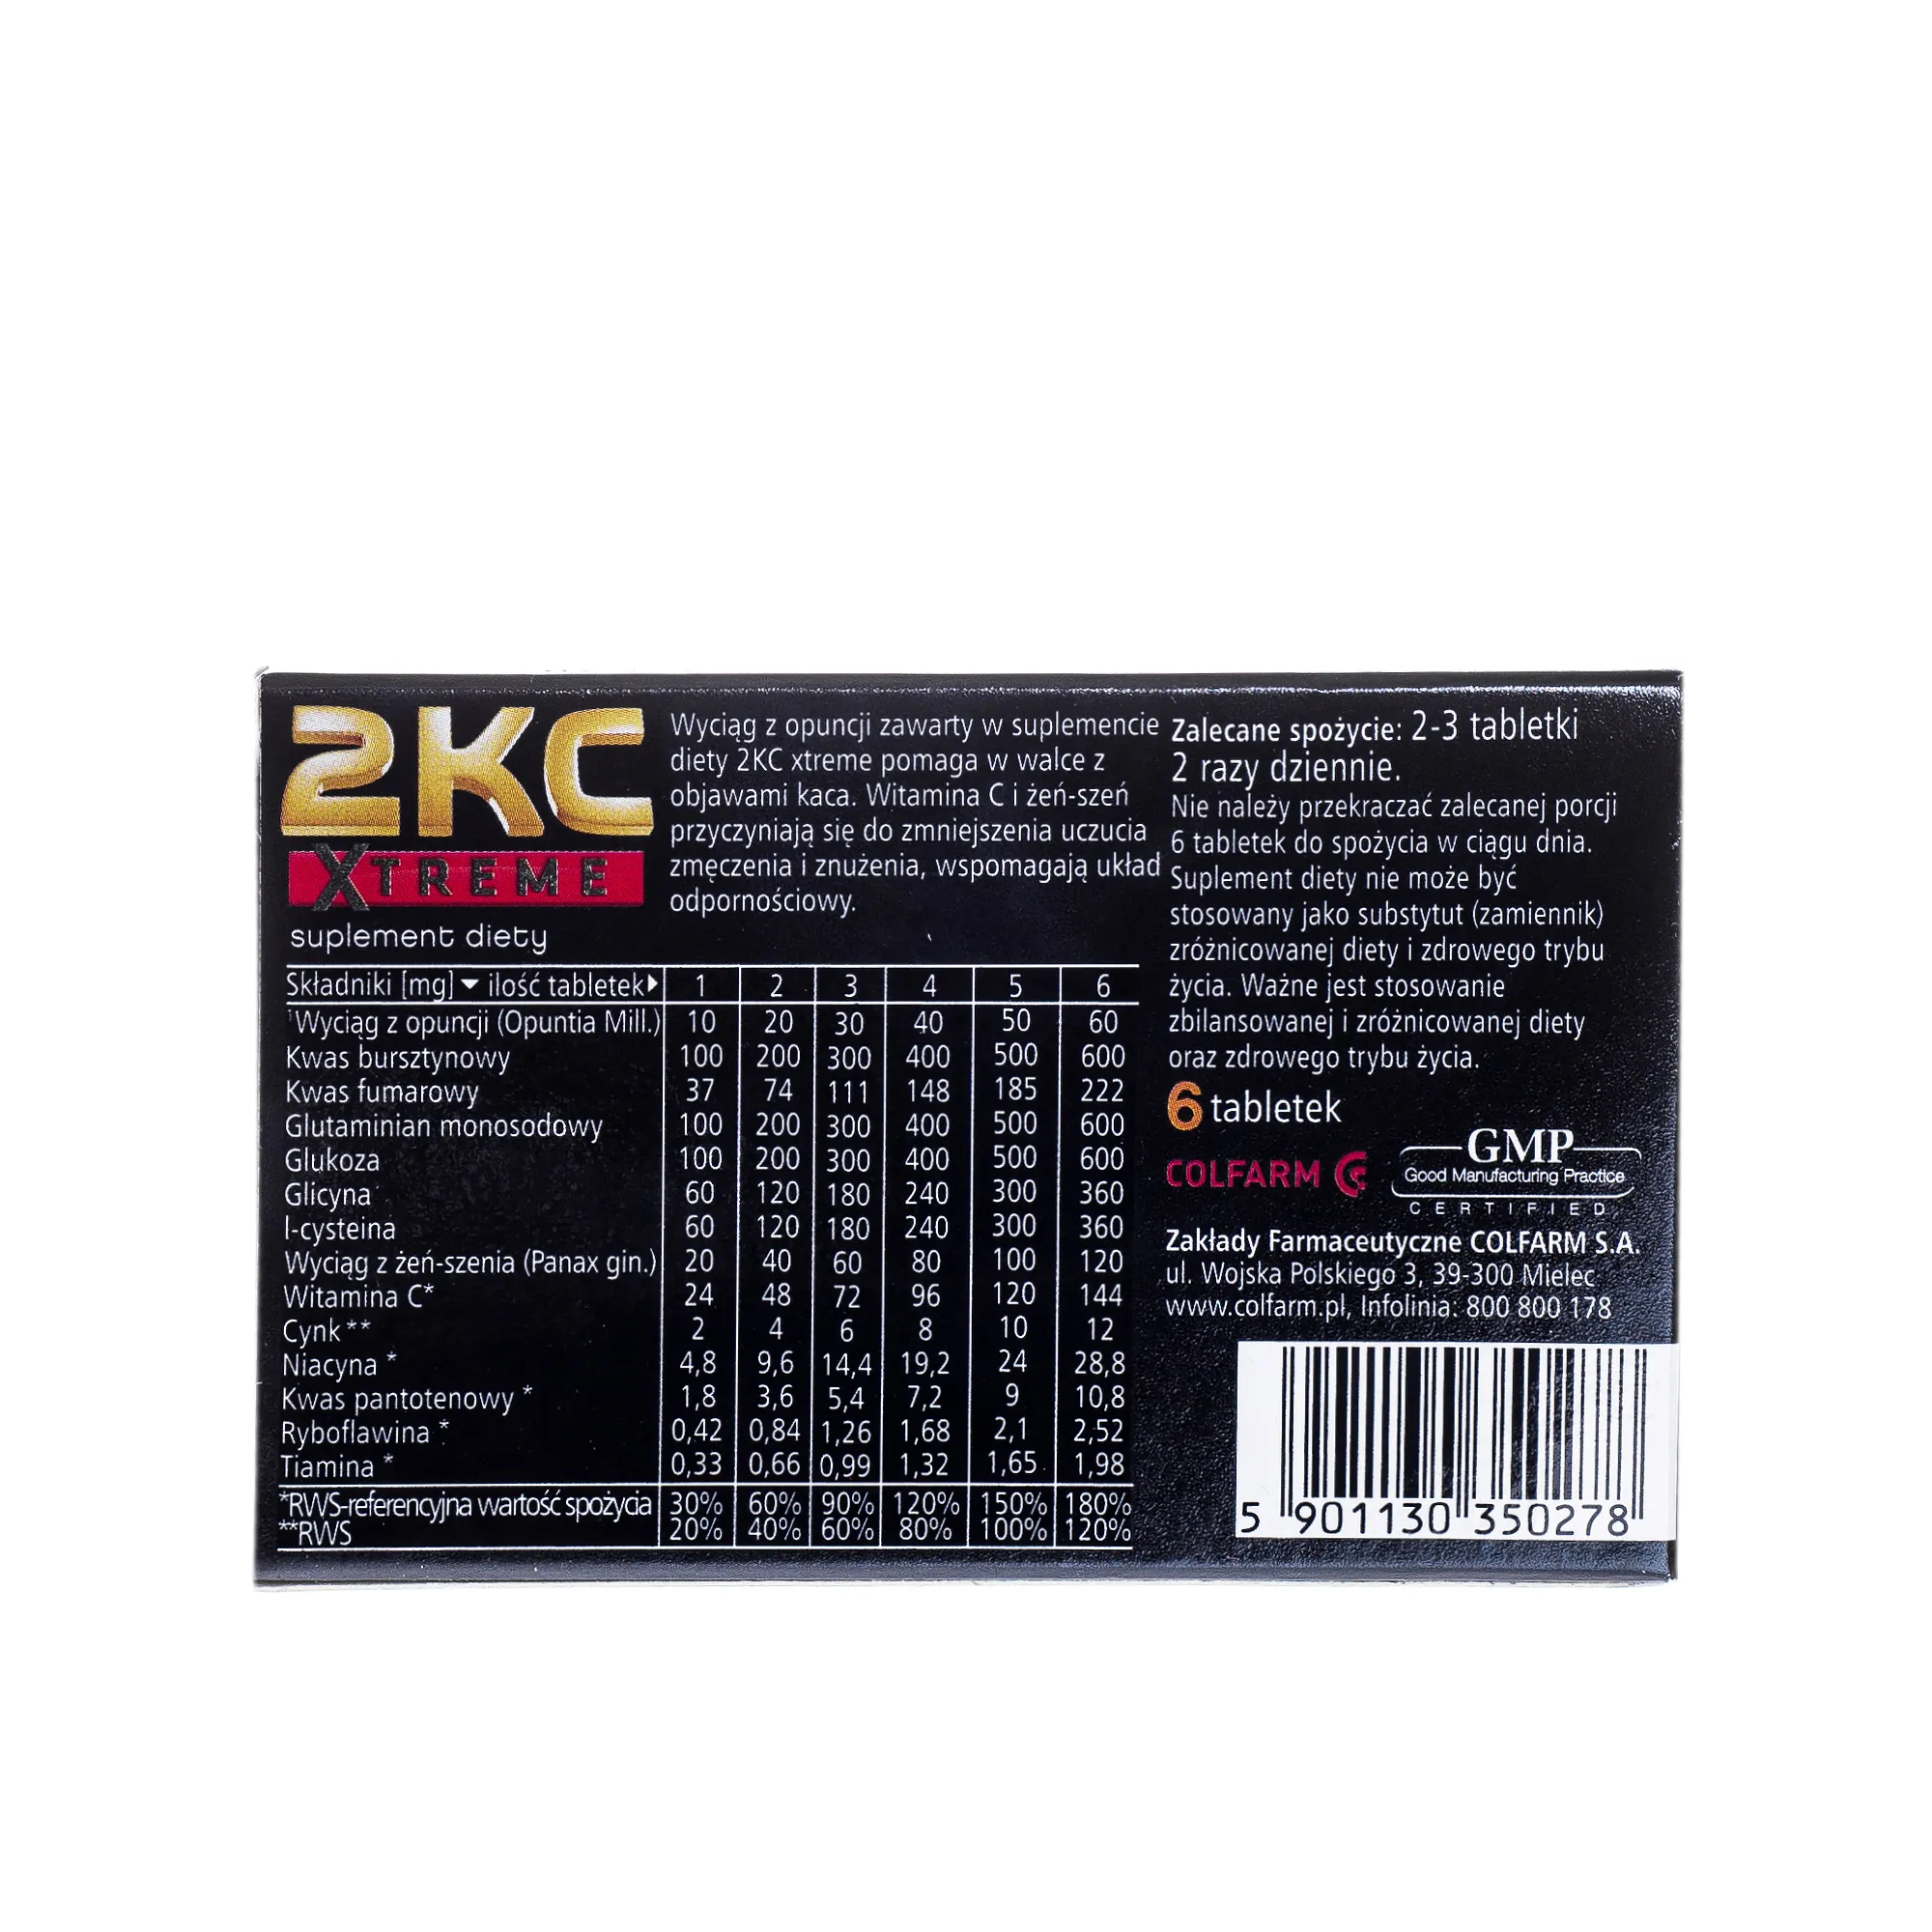 2 KC Xtreme, suplement diety, 6 tabletek 